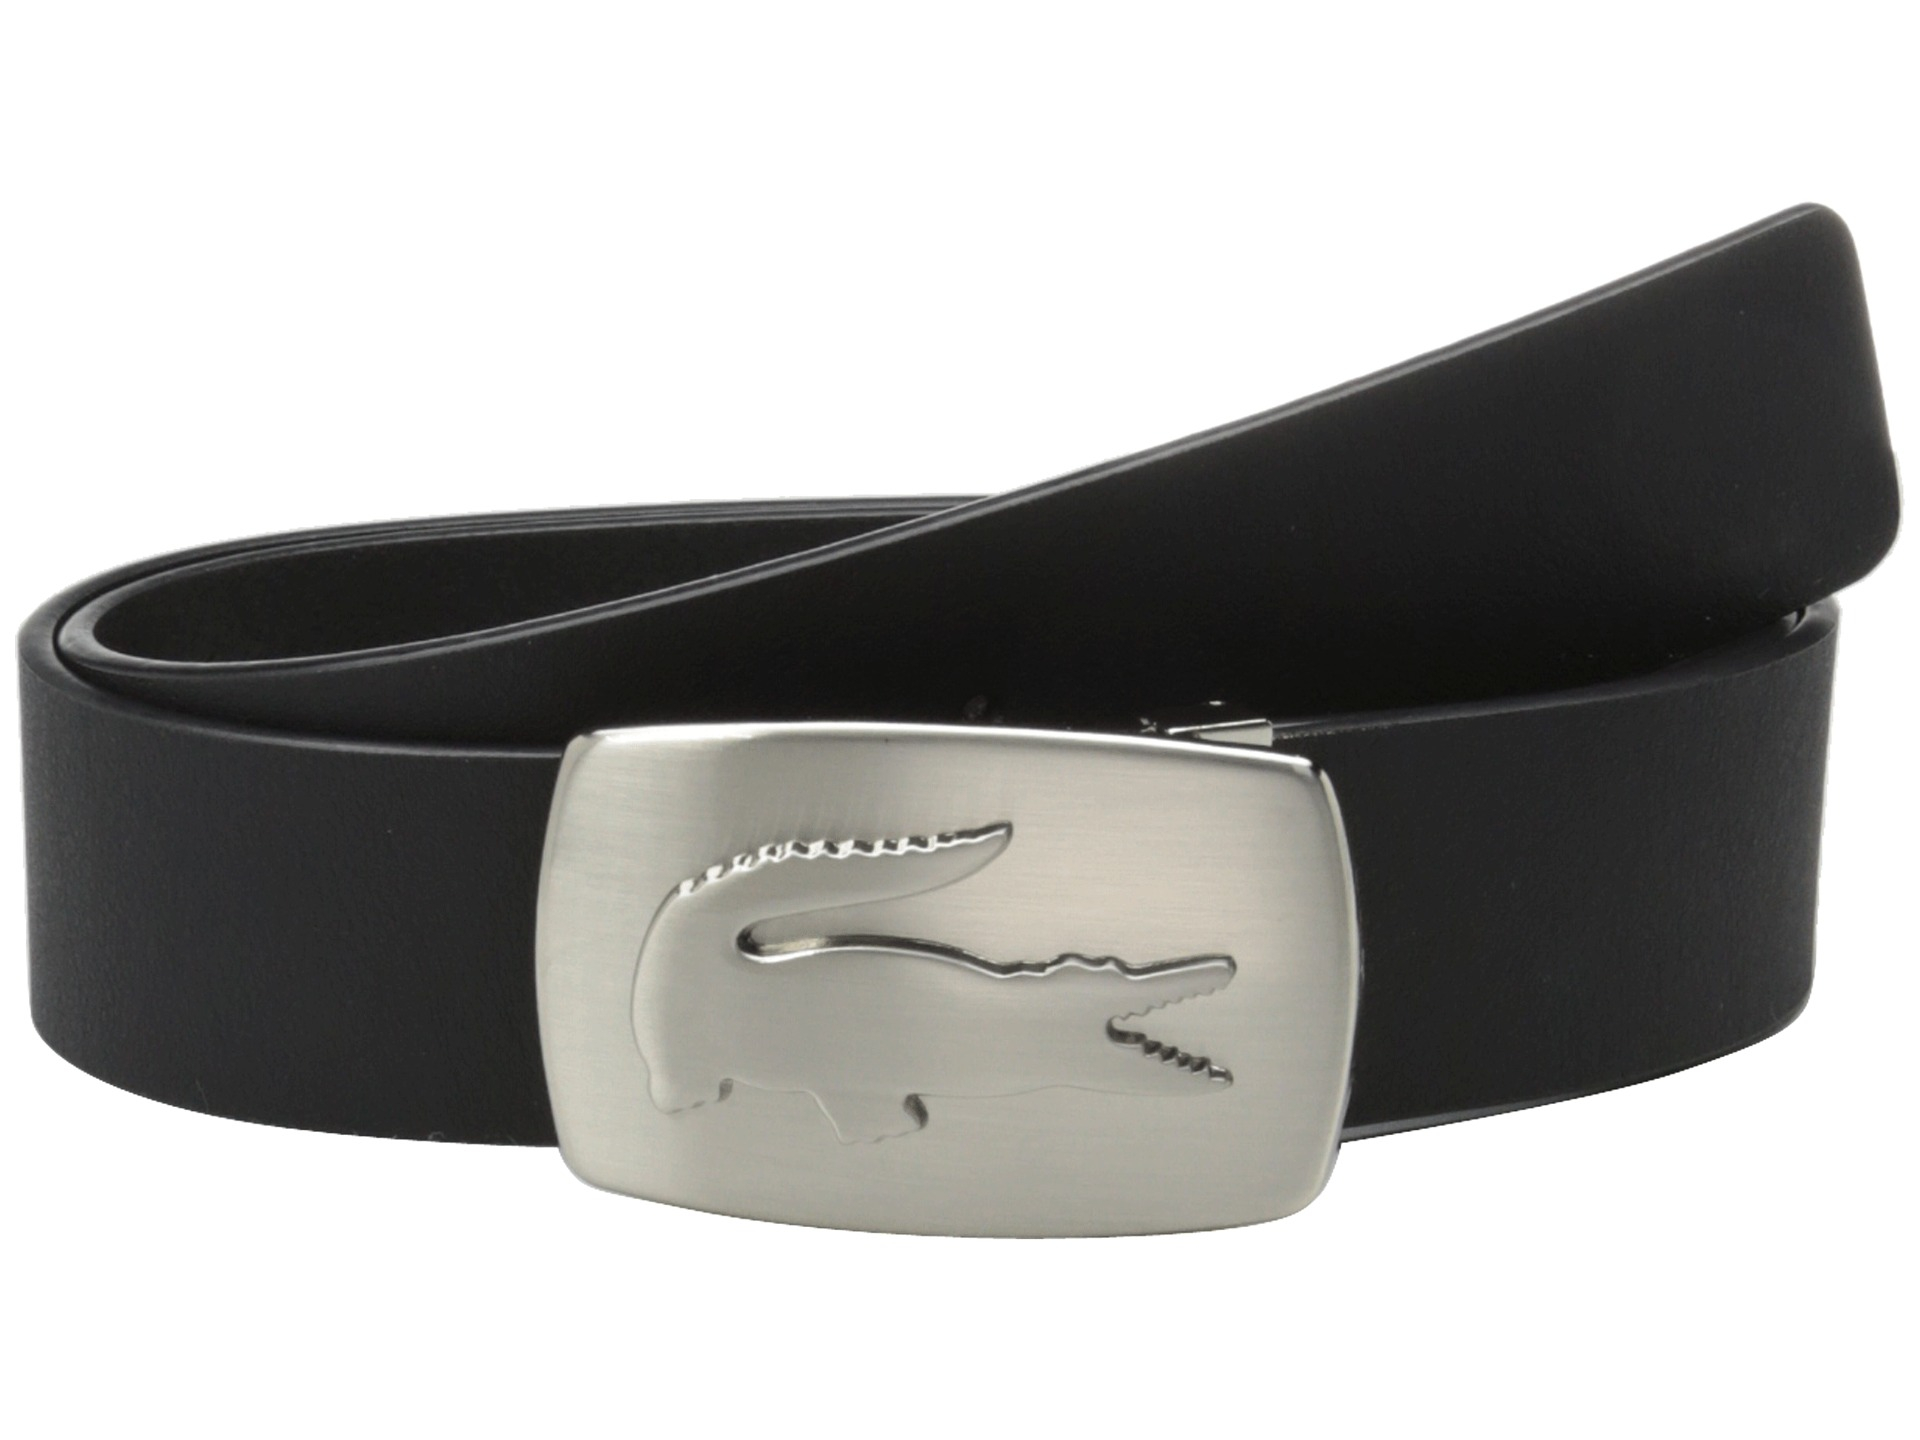 Lacoste Spw Leather Belt Metal Croc Buckle Plate in Black for Men - Lyst